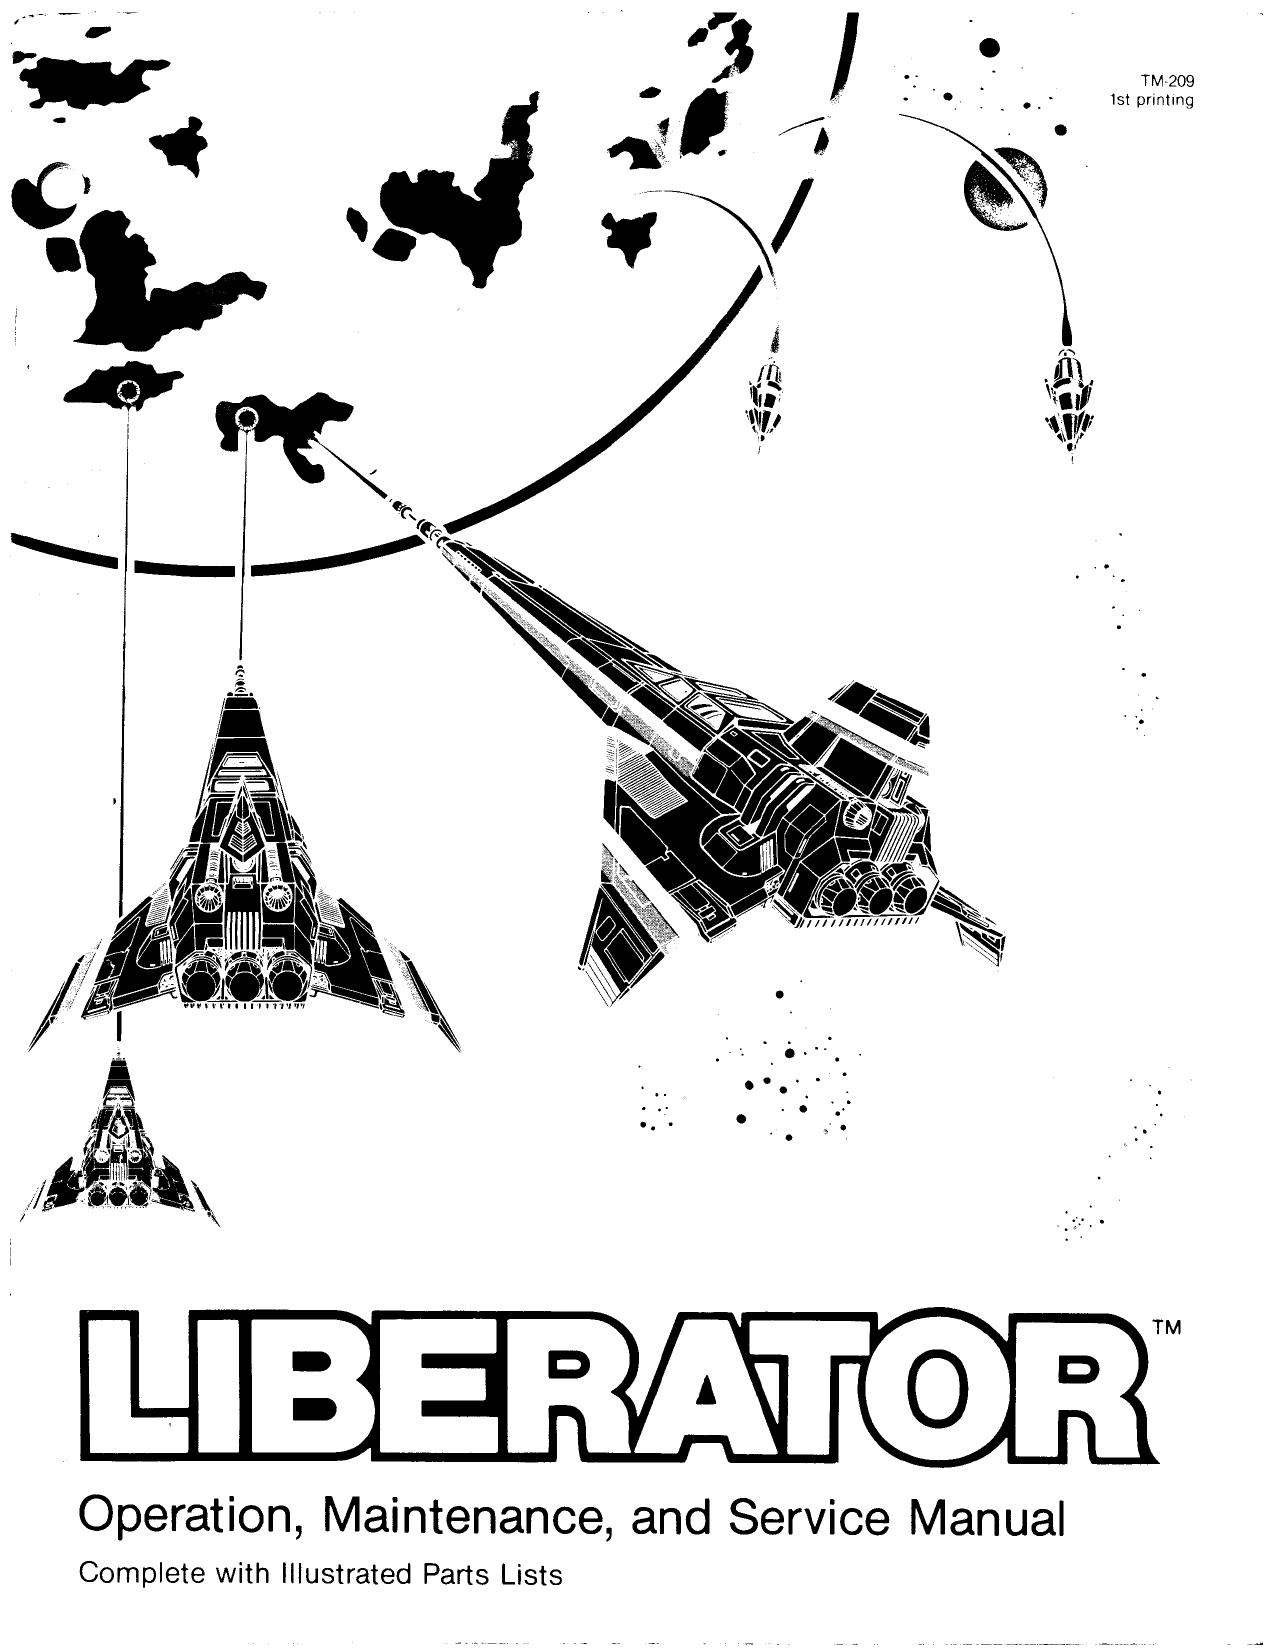 Liberator (TM-209 1st Printing) (Op-Maint-Serv-Parts) (U)